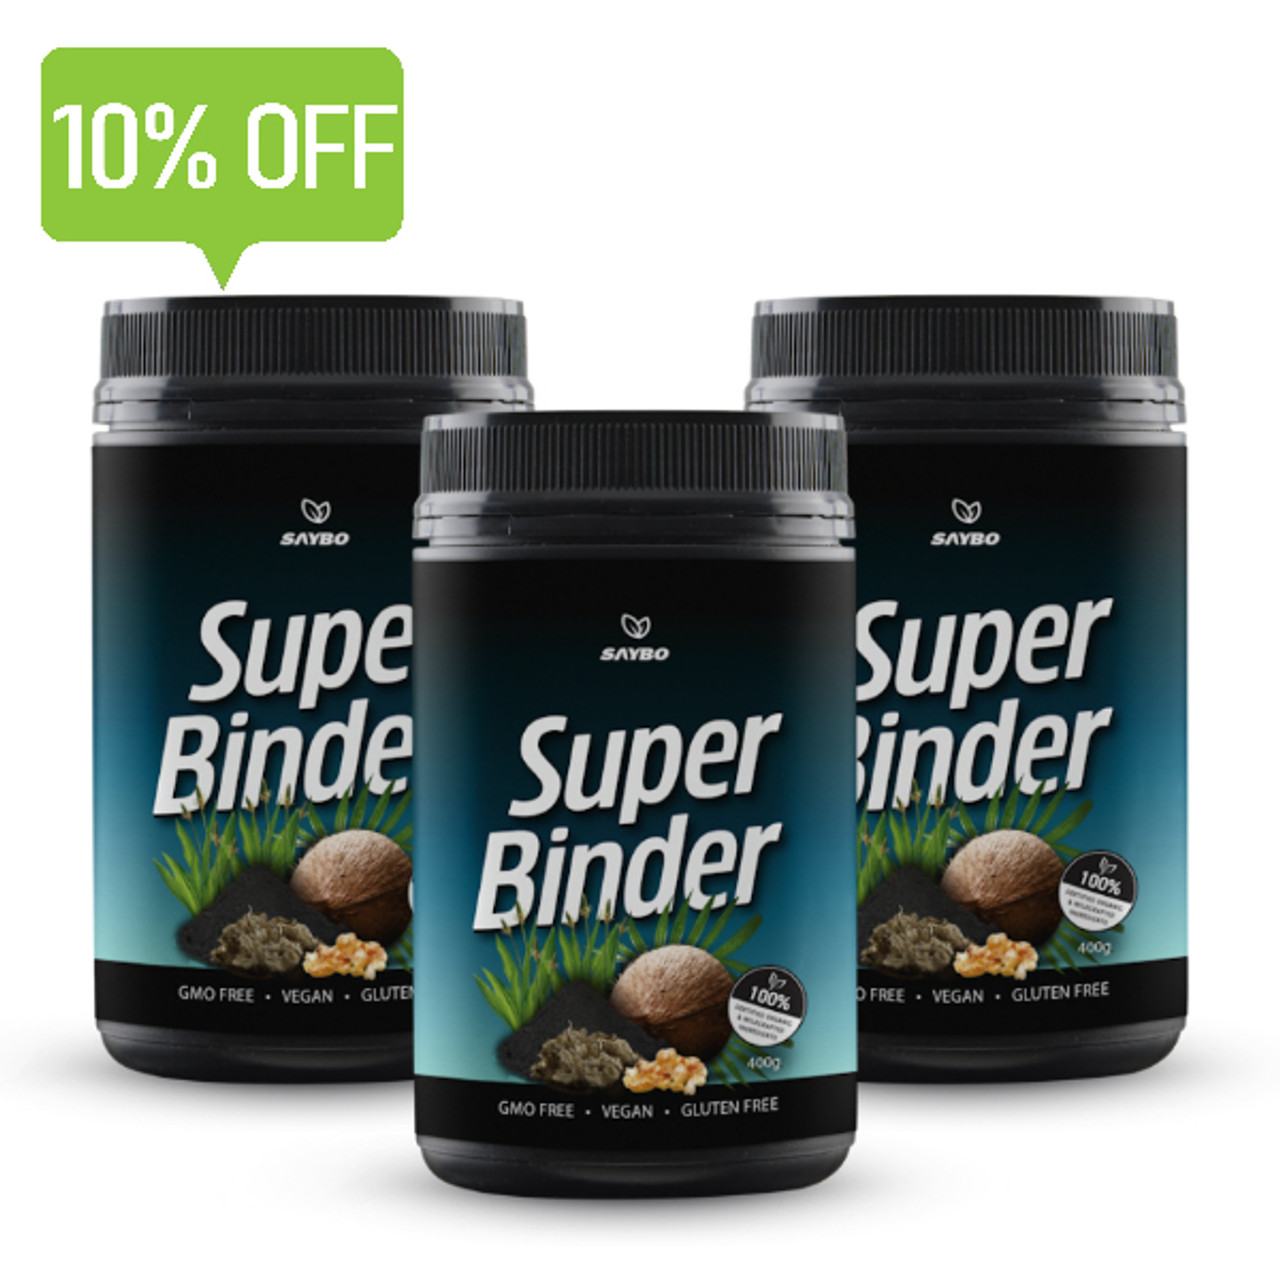 SAYBO Super Binder 400g - 3 Pack - Save 10%